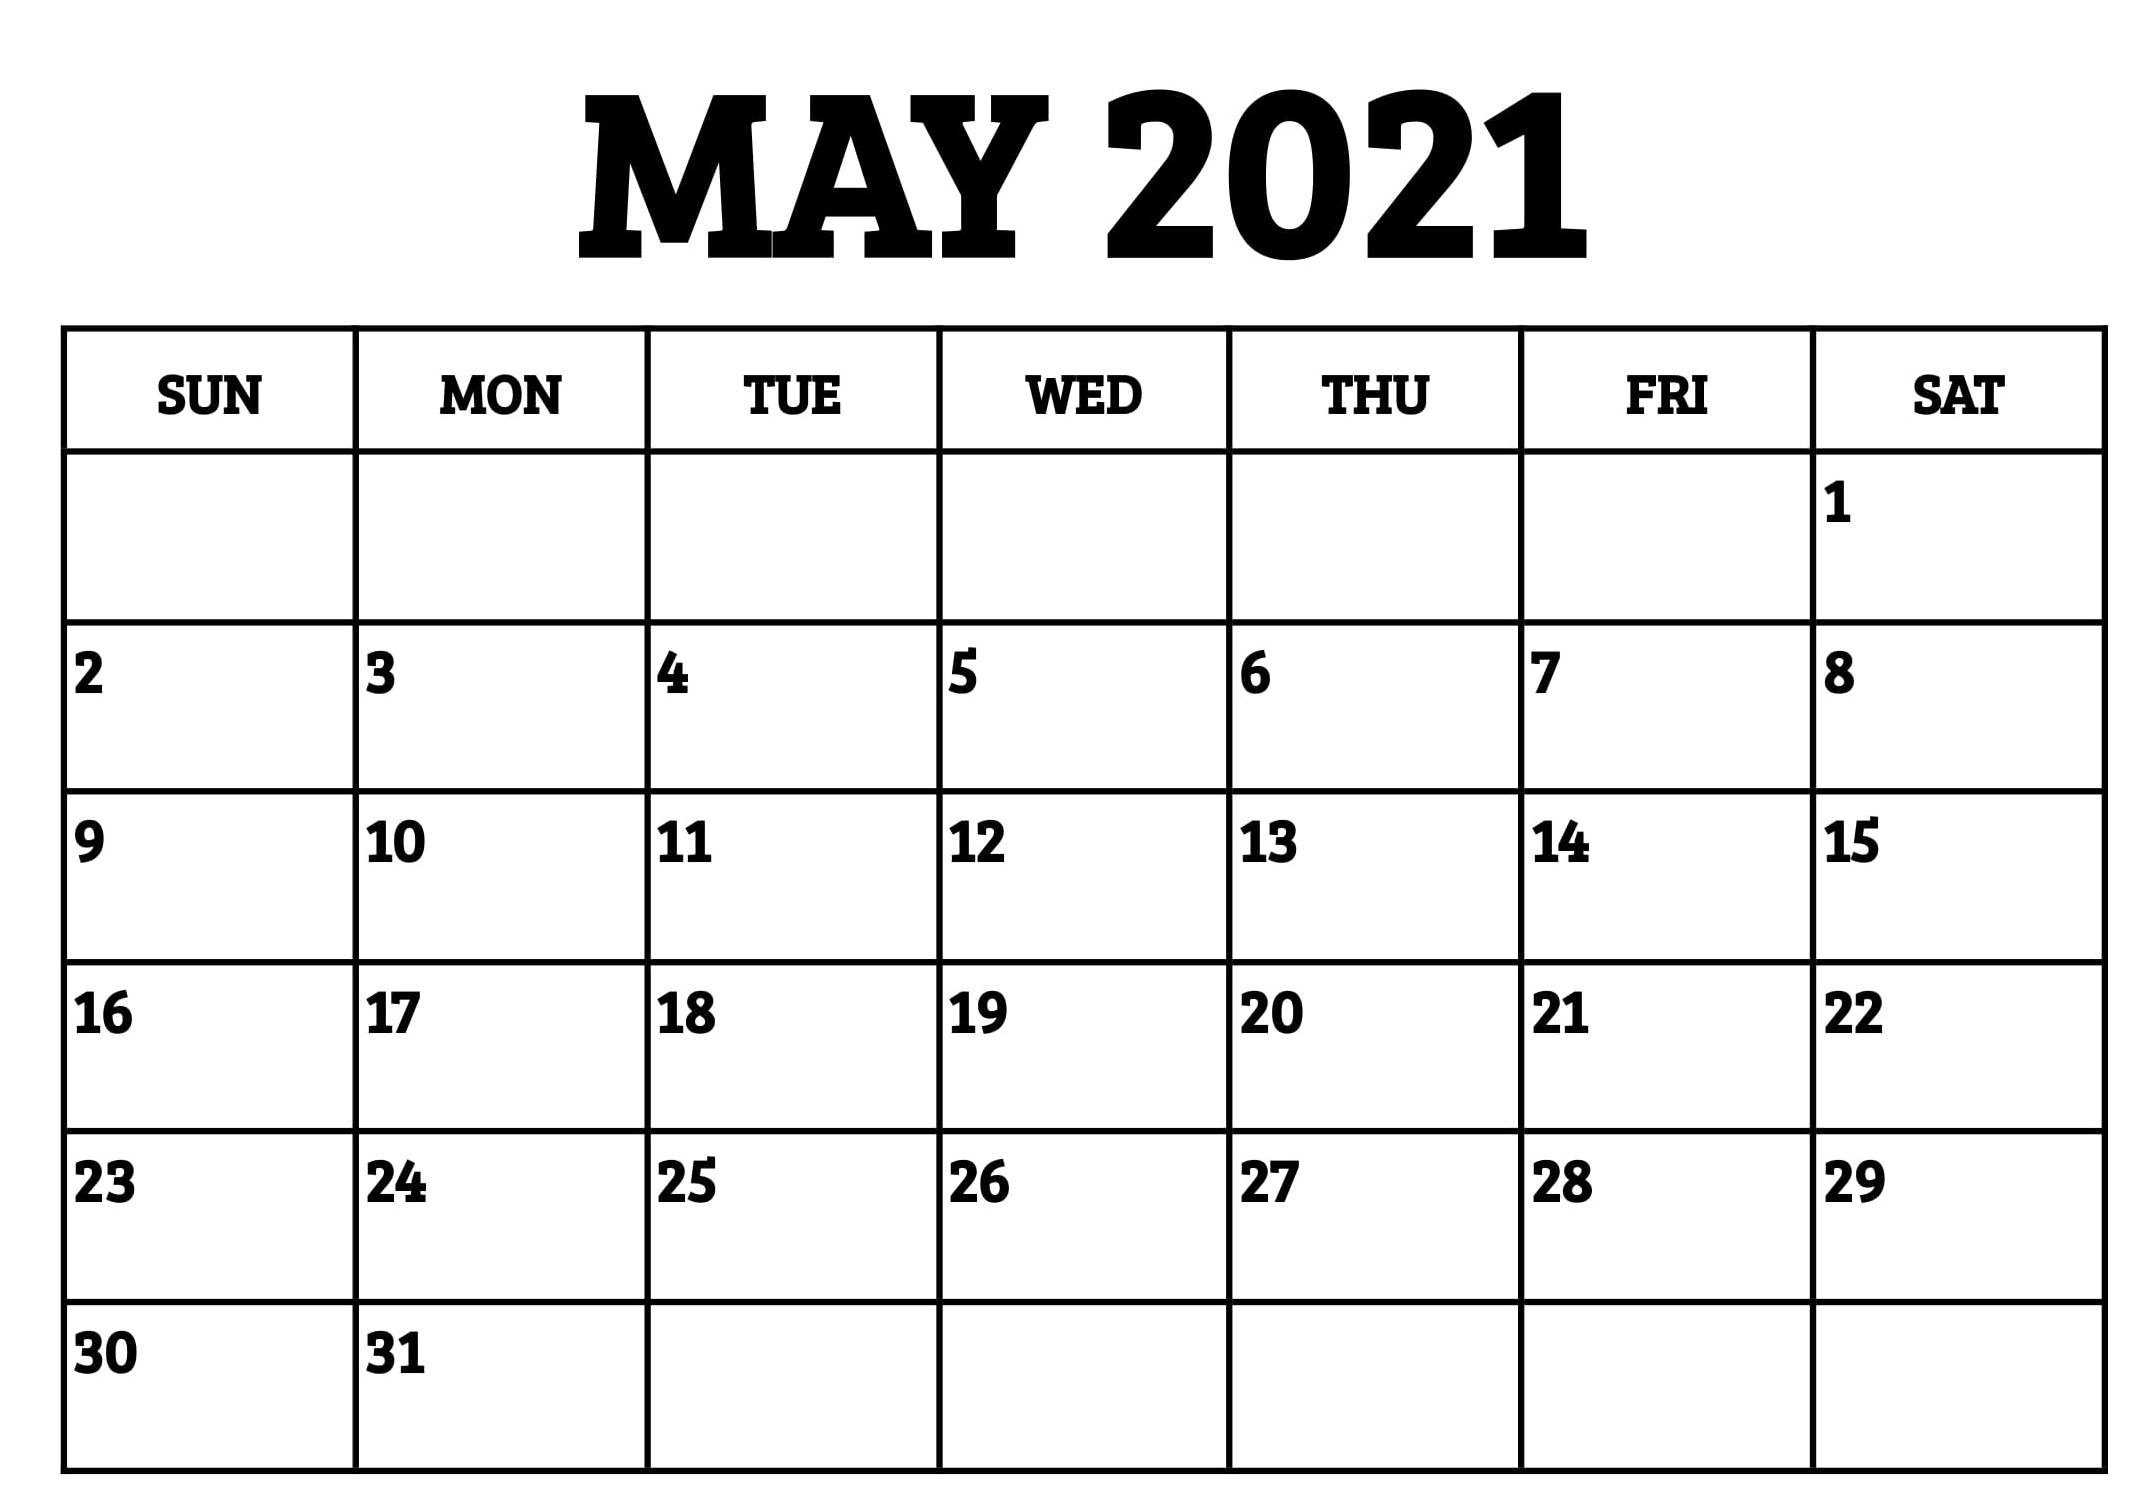 May 2021 Calendar Australia Excel Holidays Month - My Blog November 2021 Calendar Australia